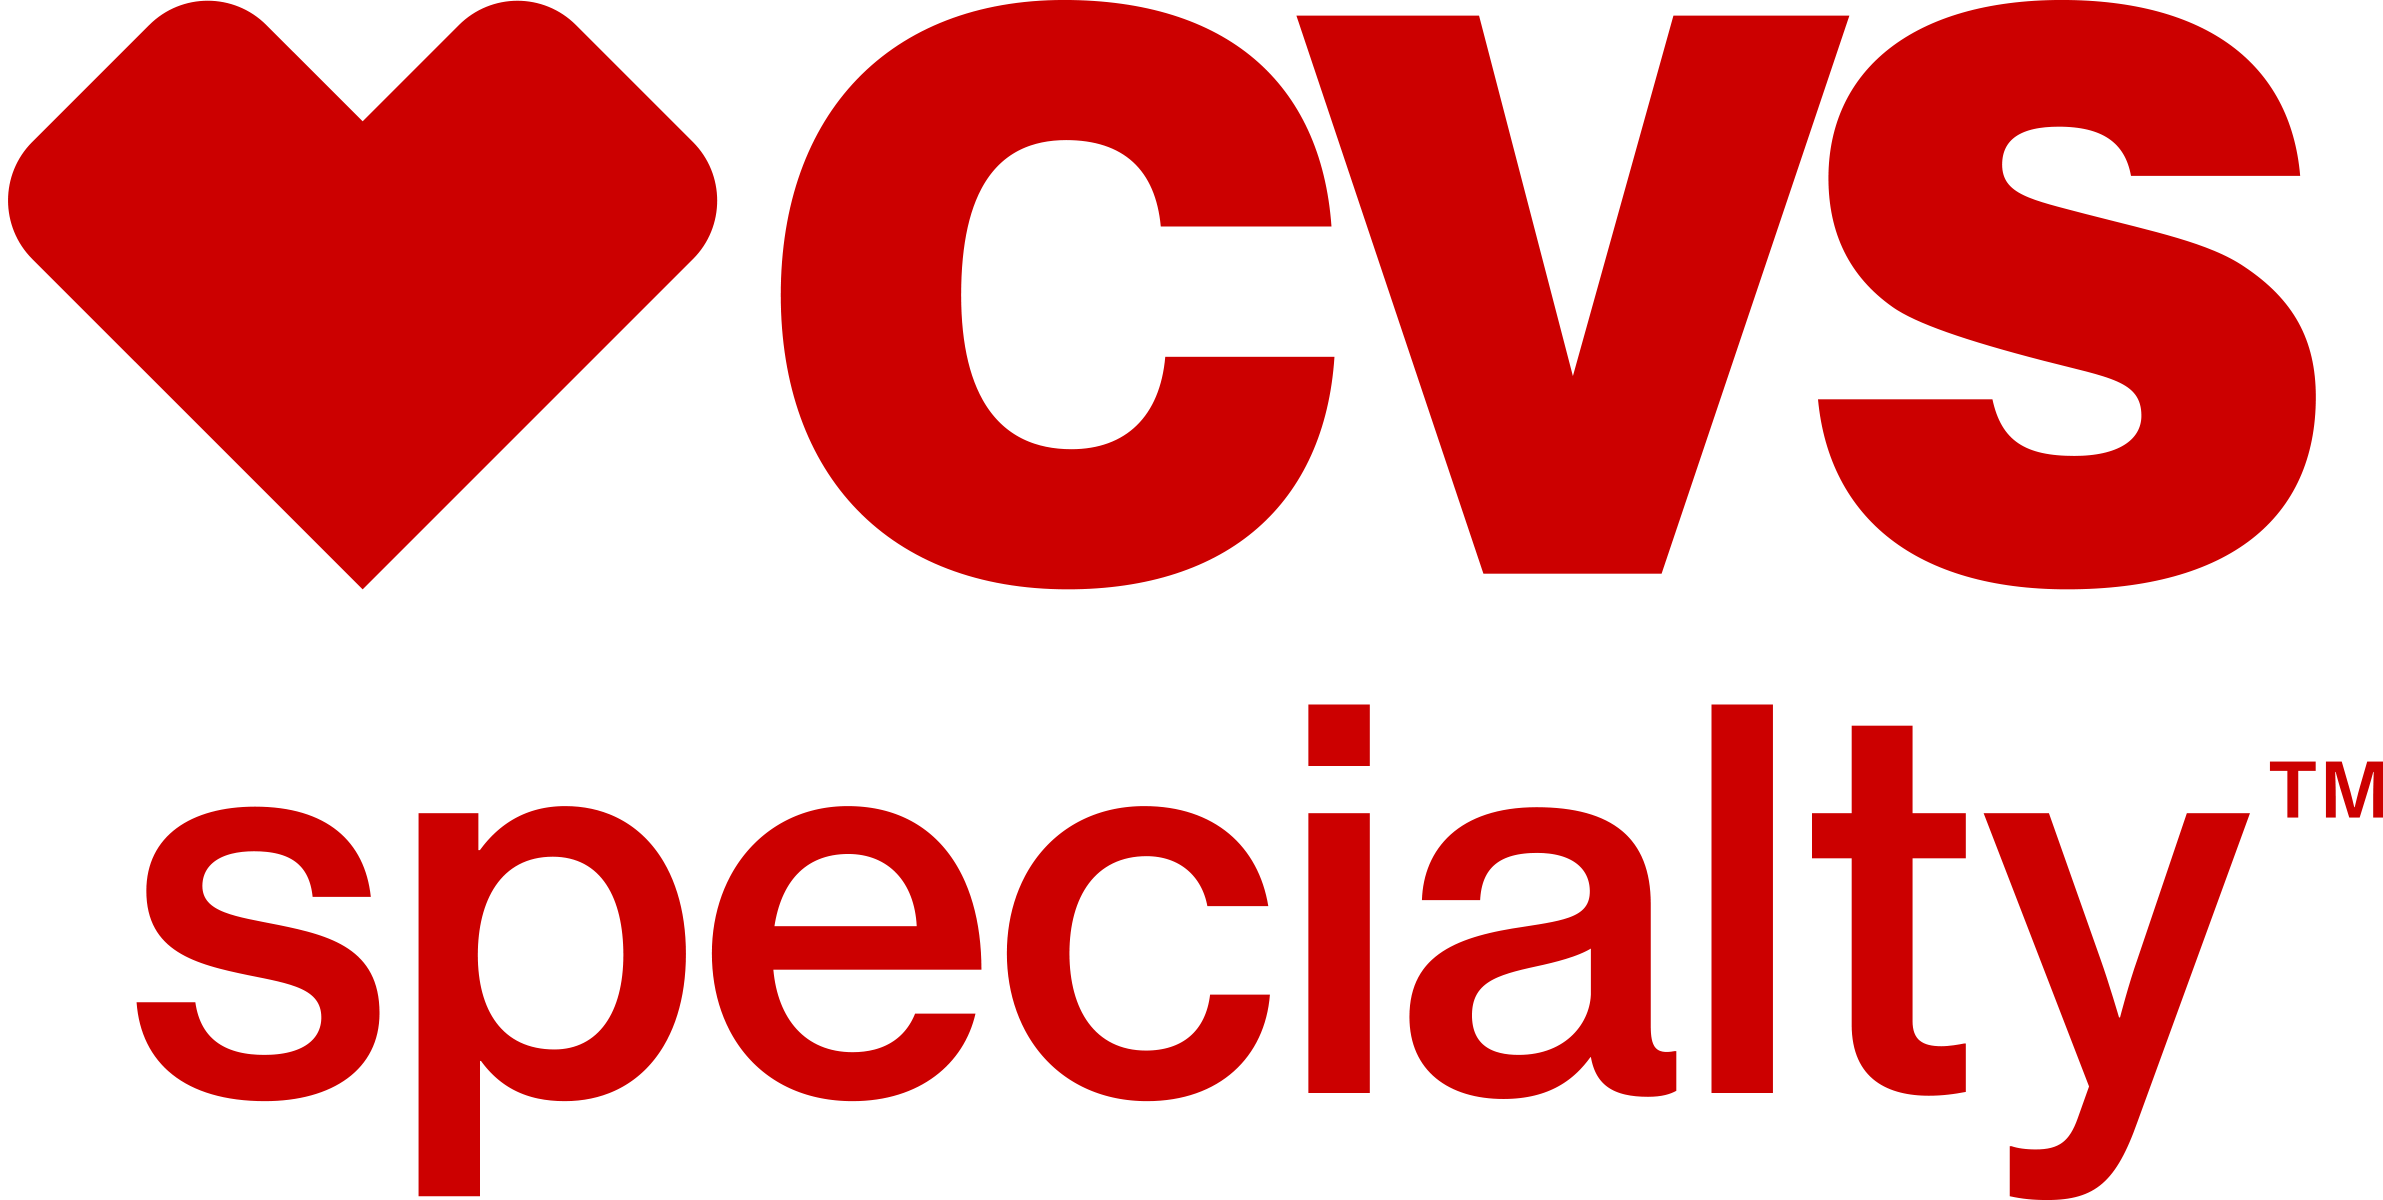 CVS Speciality